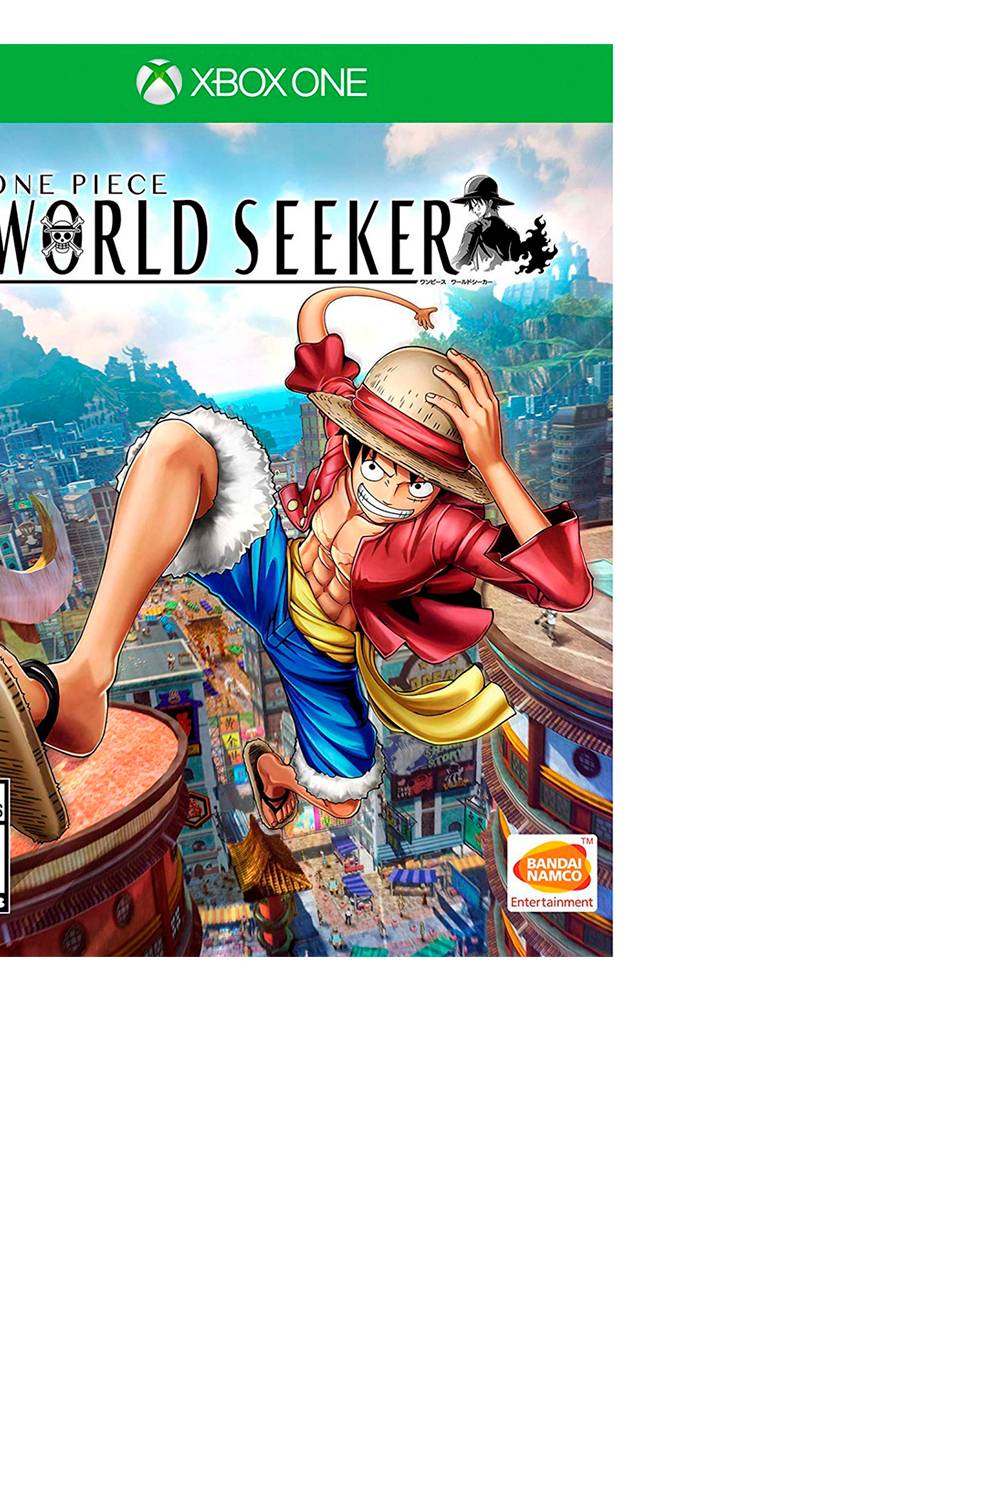 MICROSOFT - One Piece World Seeker (XONE)